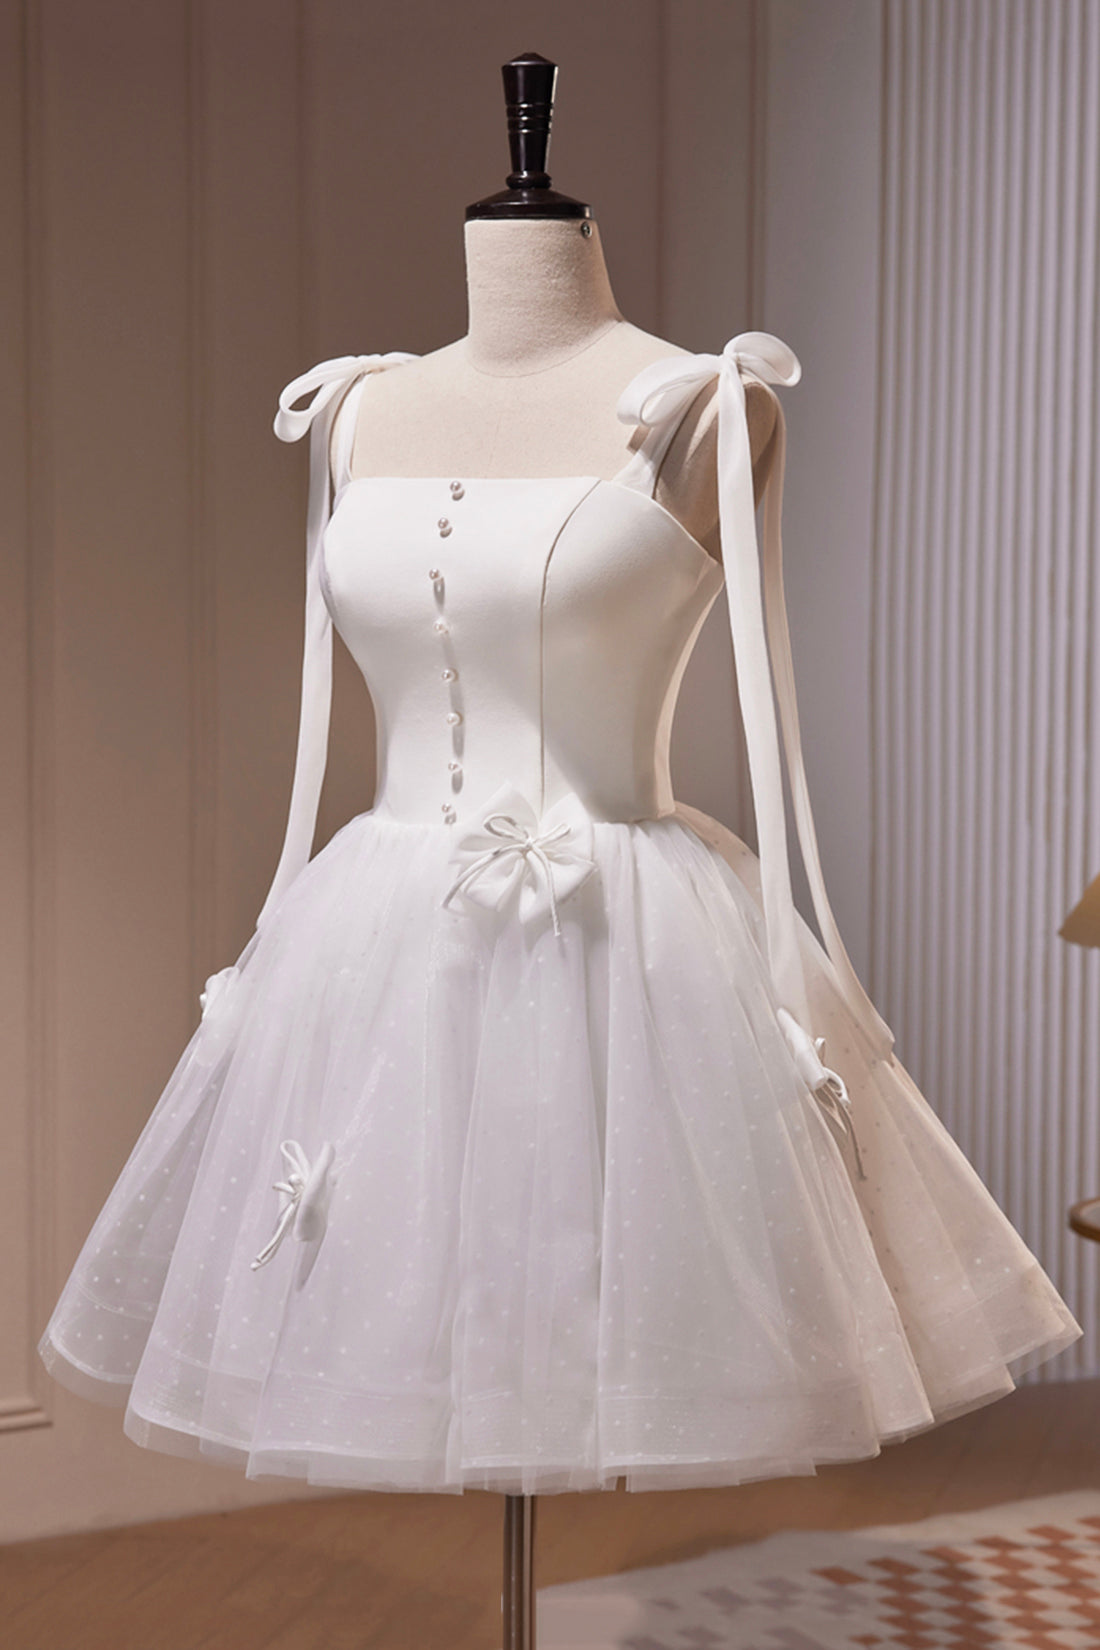 White Spaghetti Strap Short Prom Dress, White Tulle Party Dress